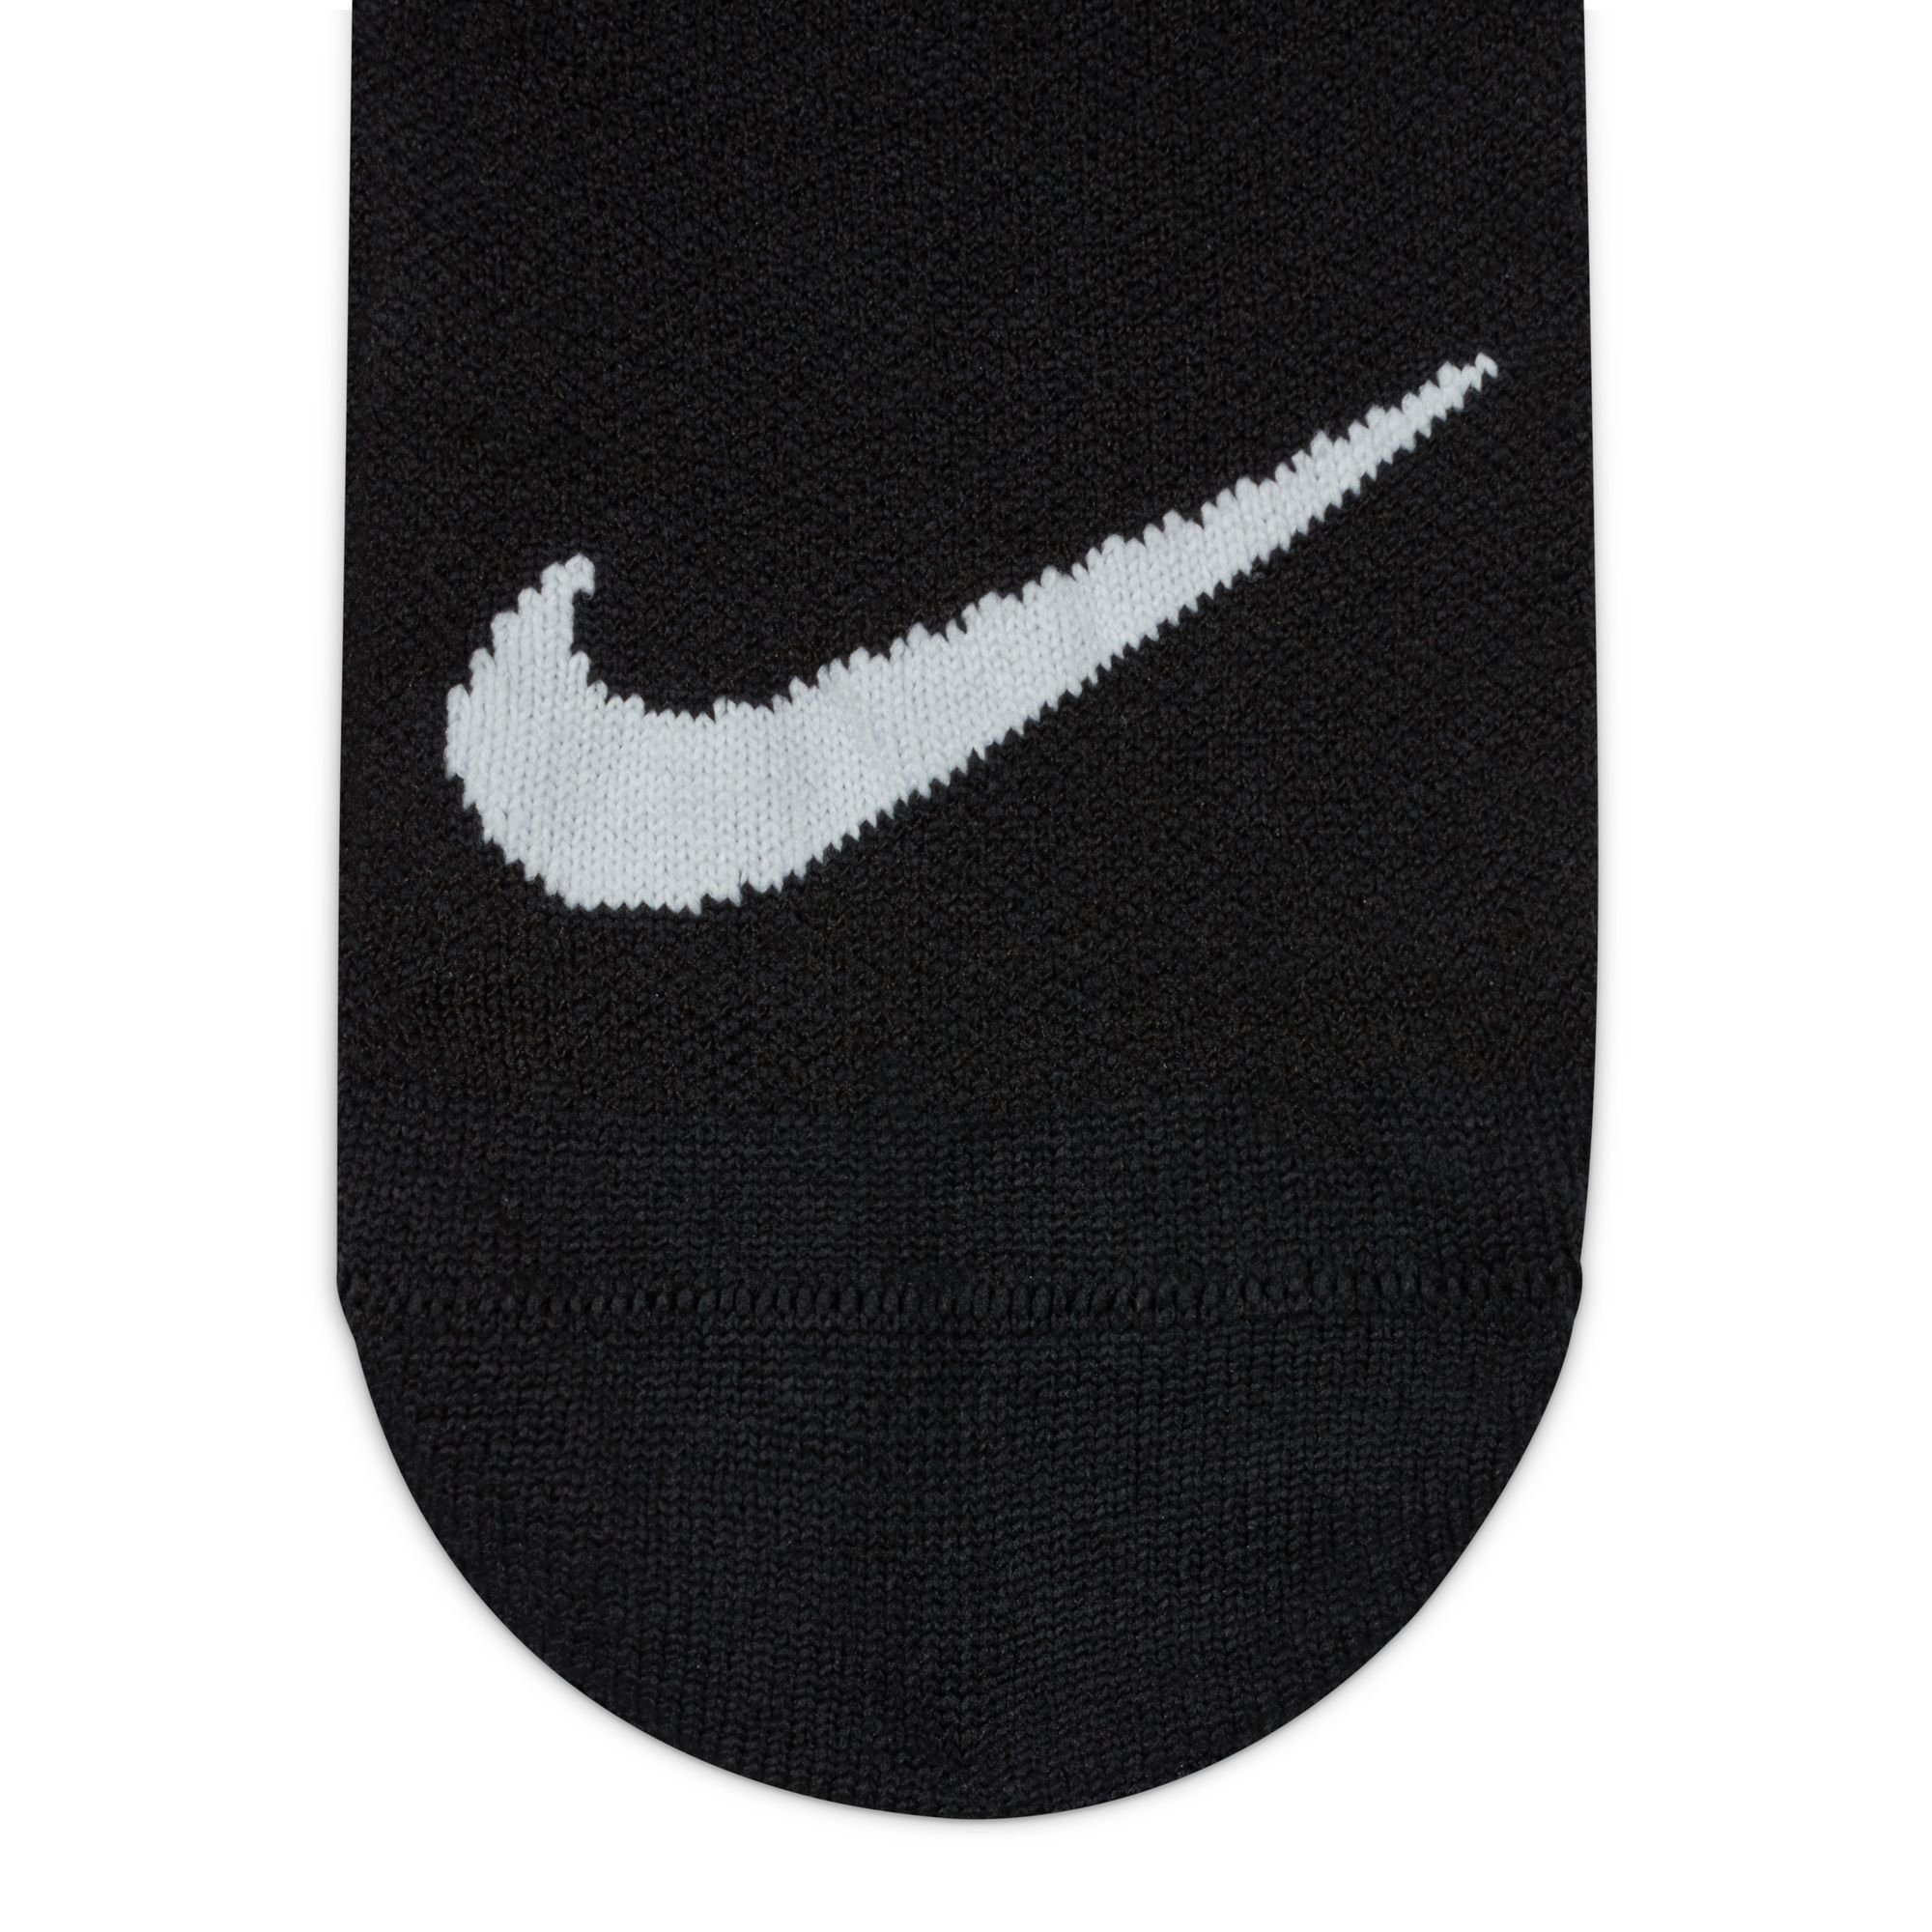 Nike Füßlinge (3-Paar) mit atmungsaktivem schwarz, 1x weiß 1x 1x grau, Mesh